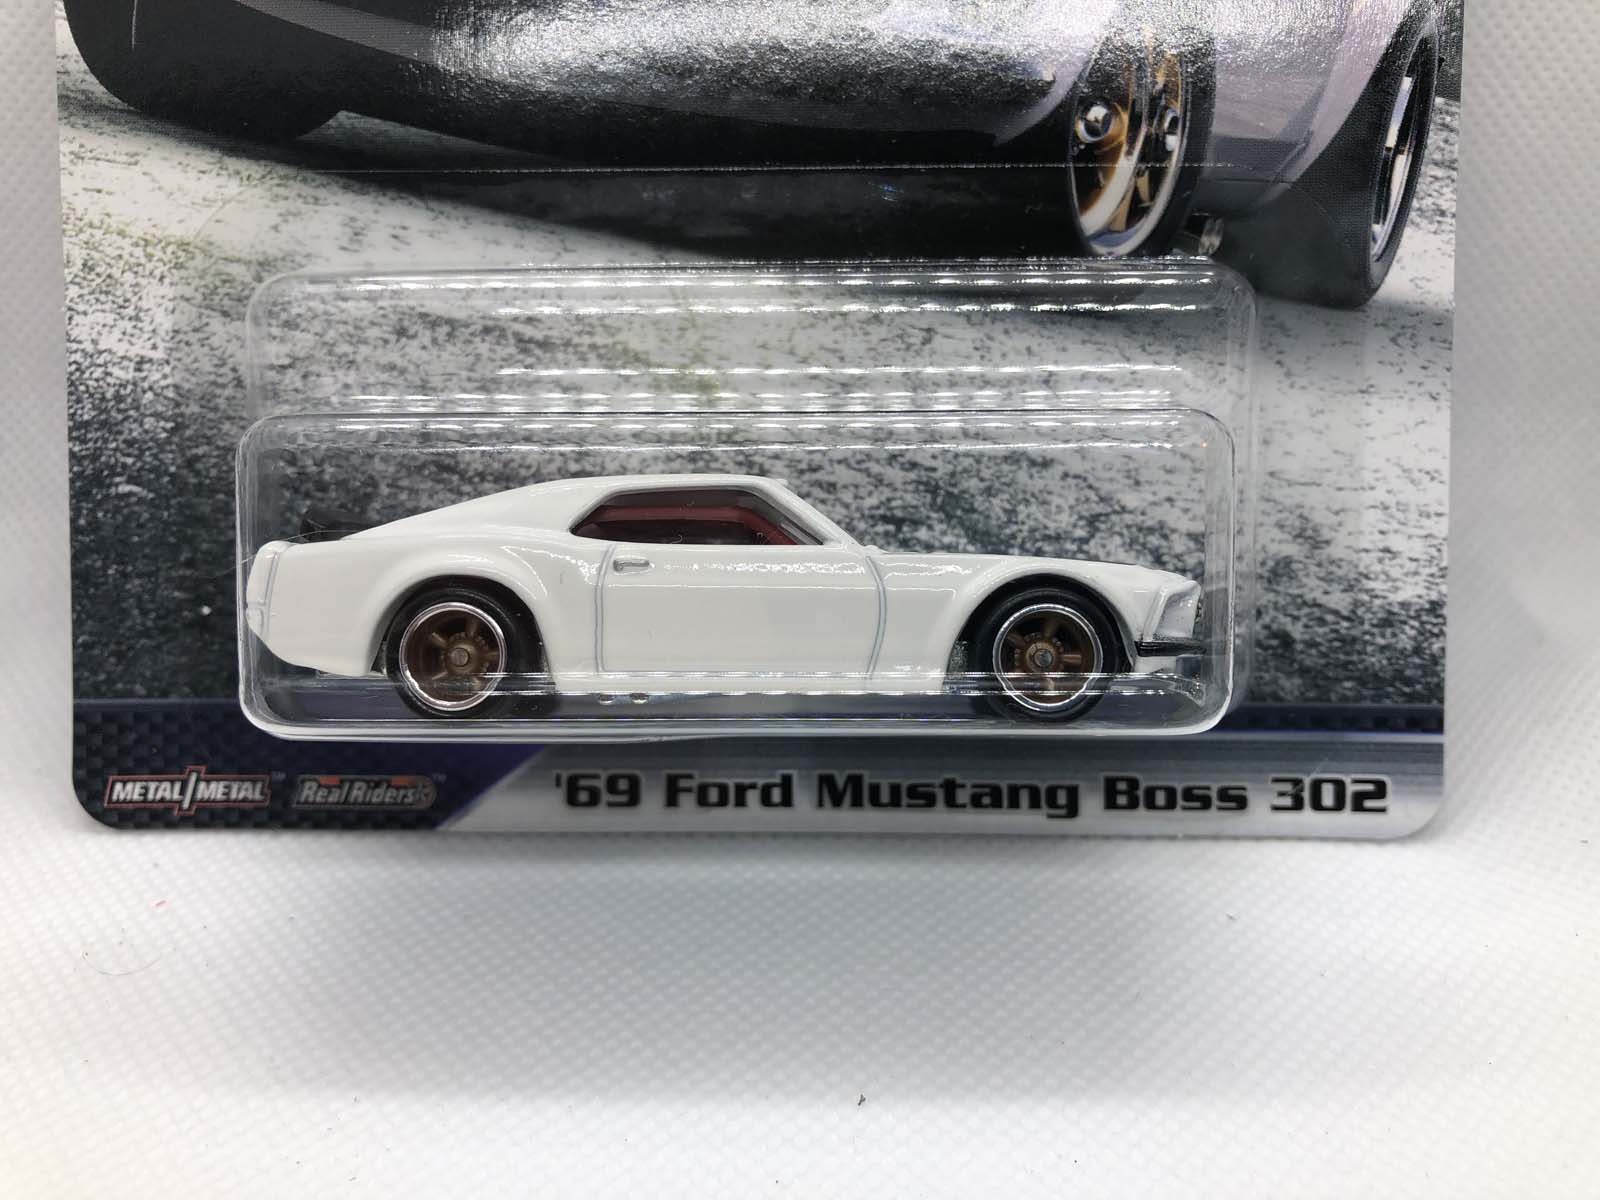 69 Ford Mustang Boss 302 Hot Wheels